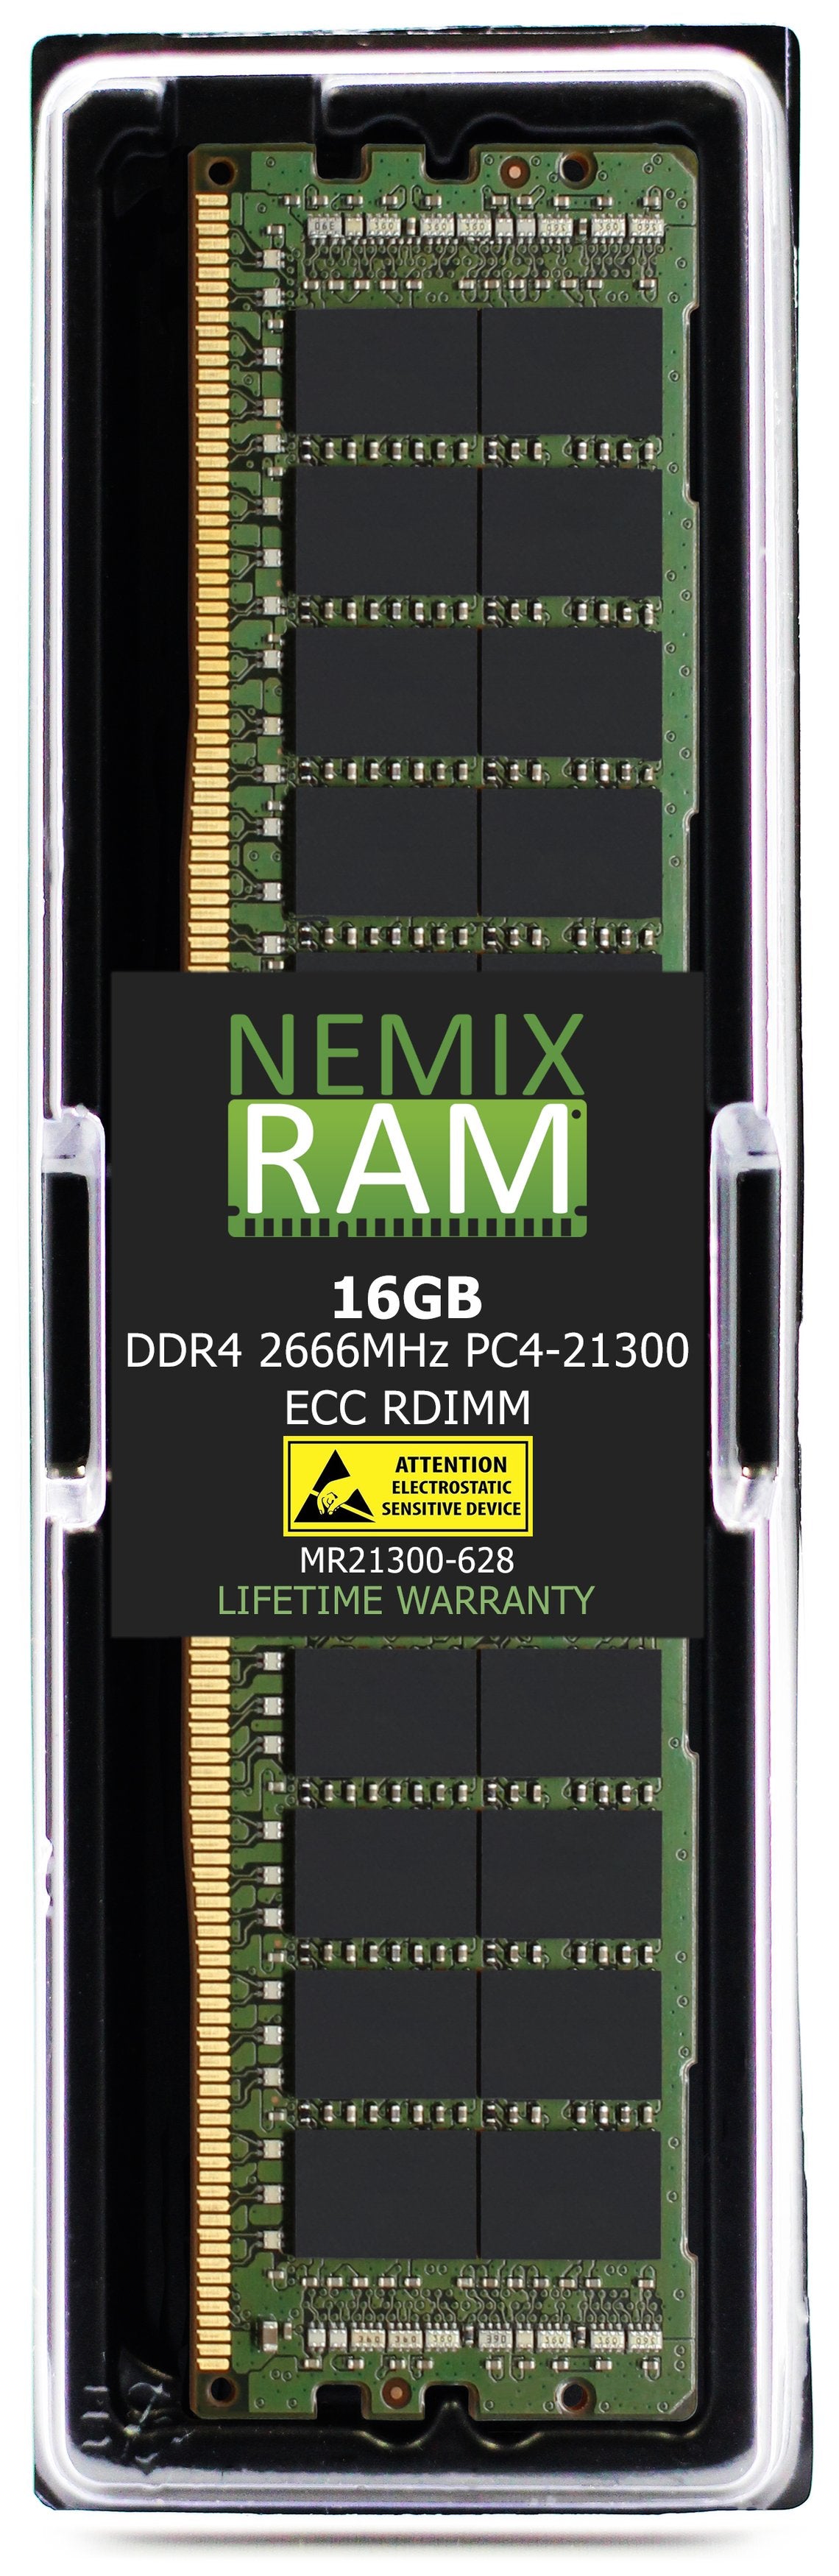 NEC Express5800 R320g Memory Module N8802-069 16GB DDR4 2666MHZ PC4-21300 RDIMM